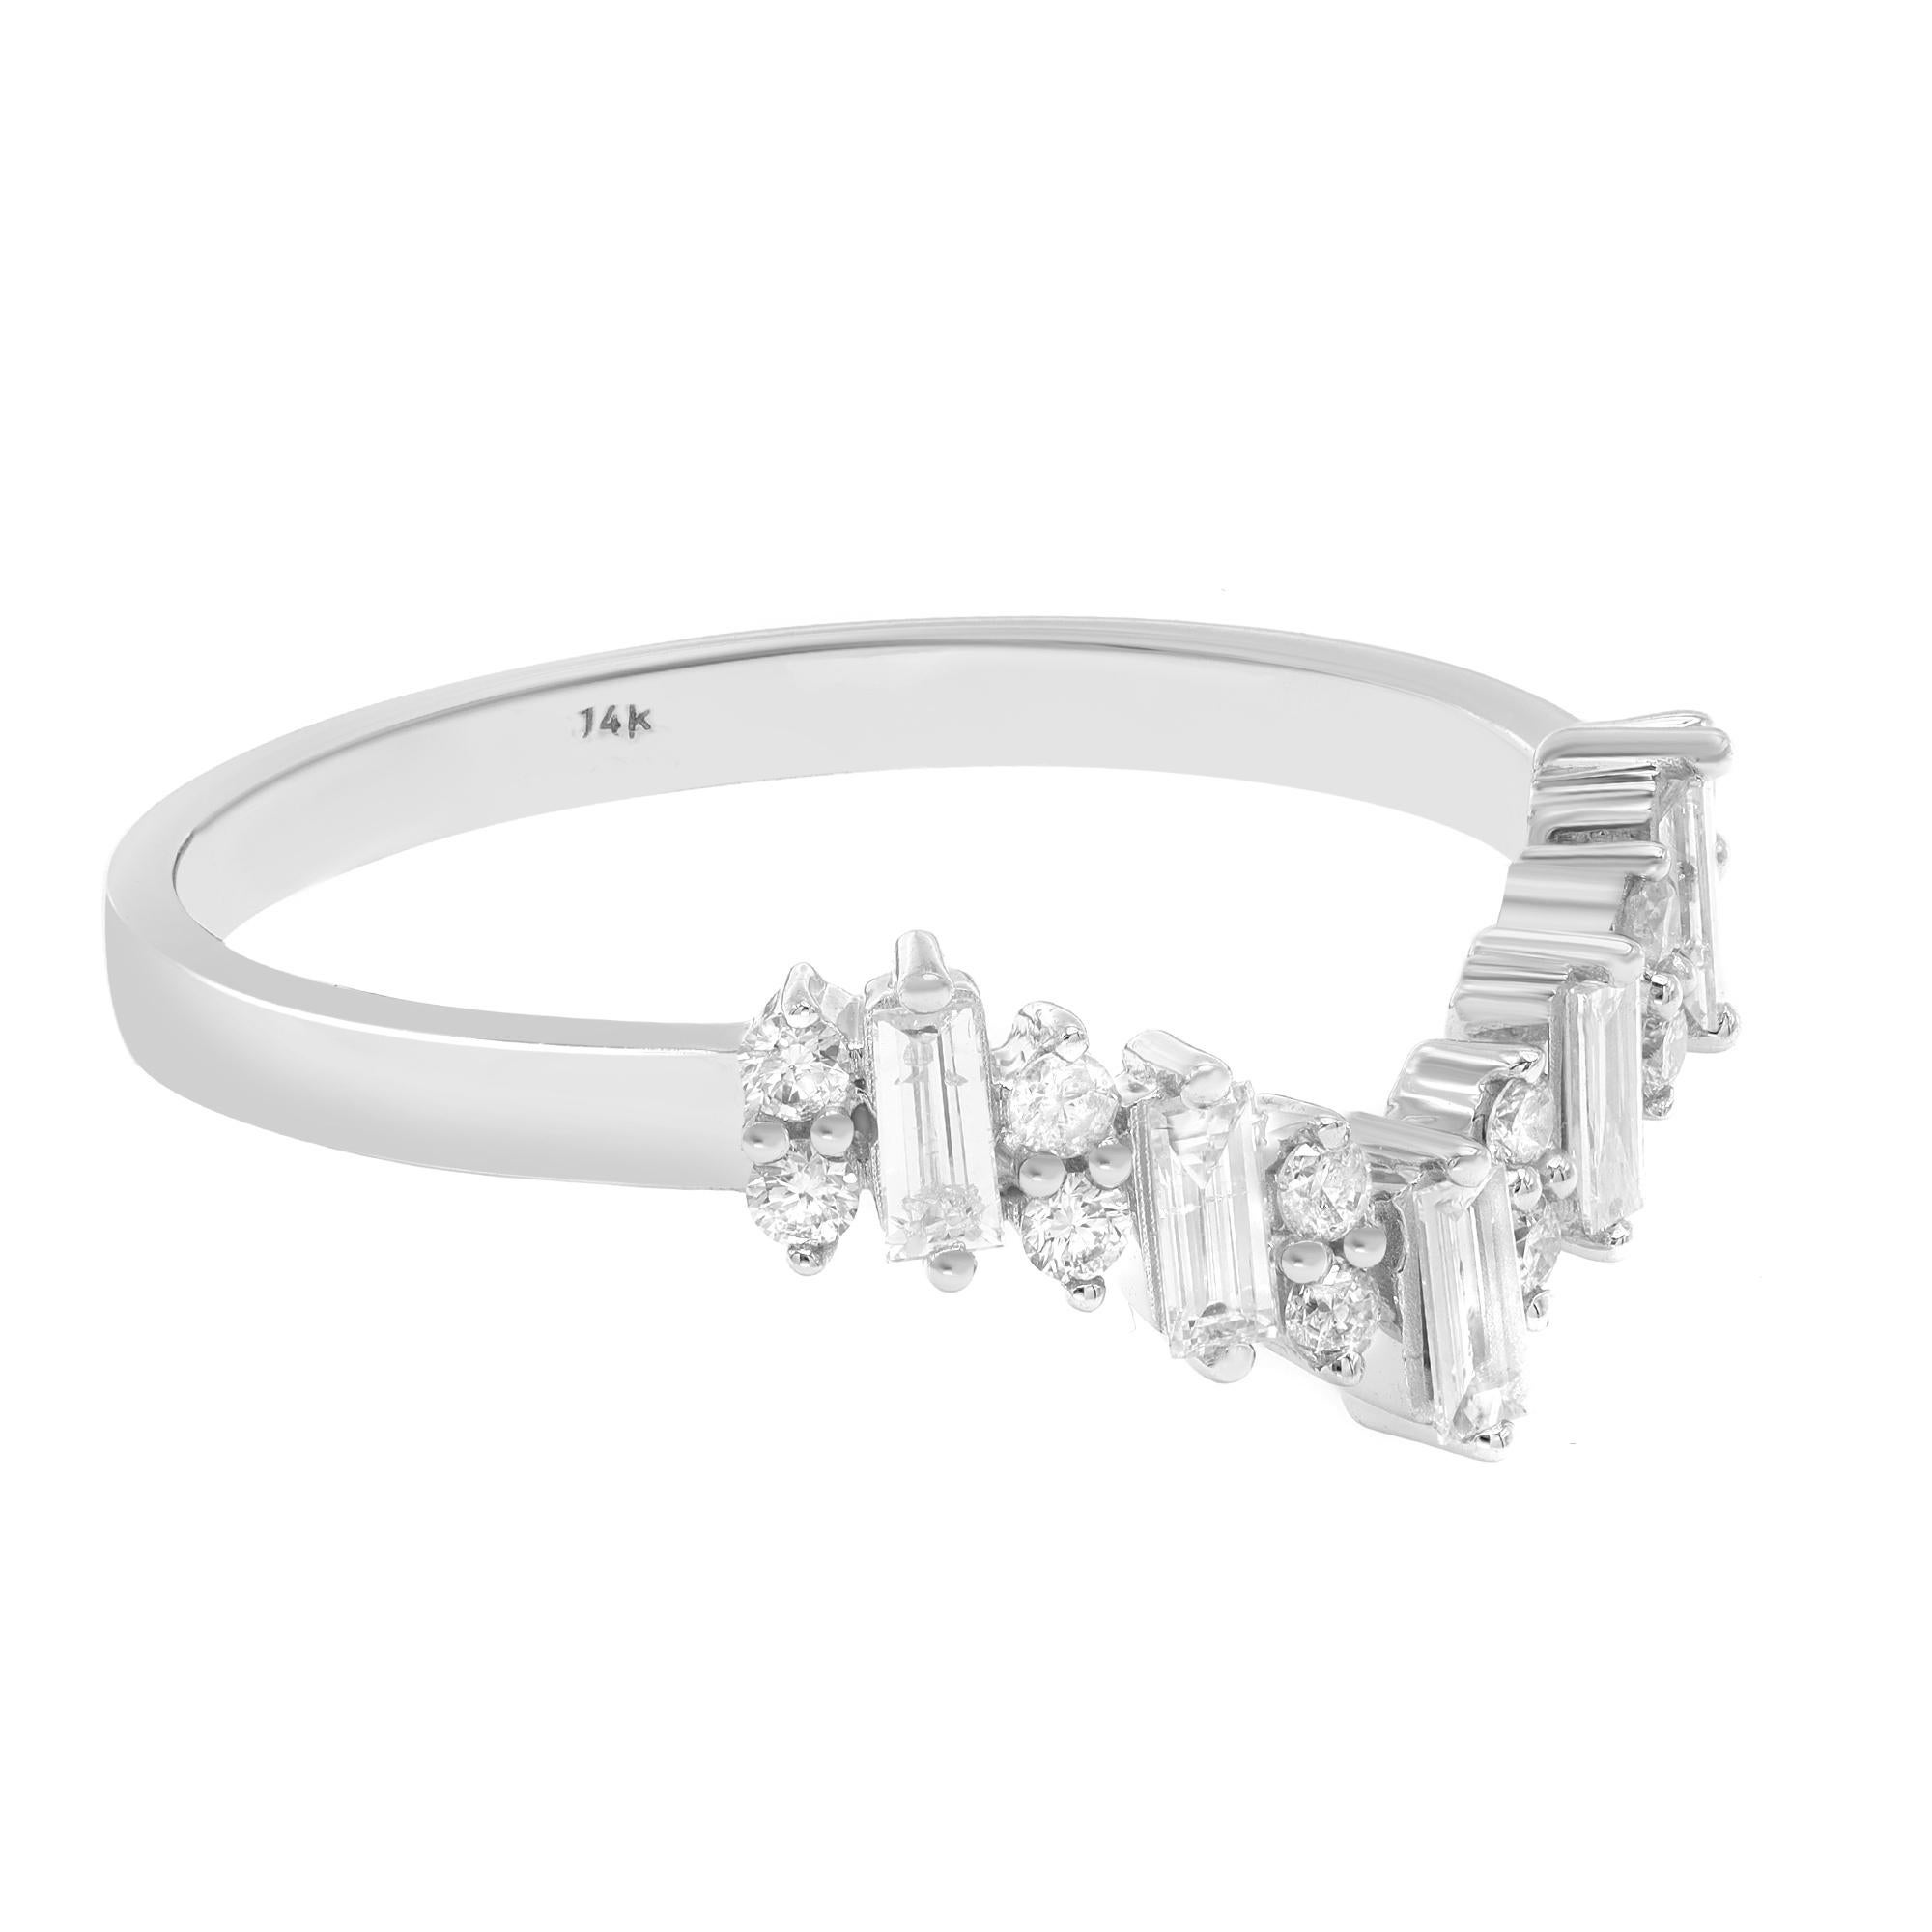 Baguette Cut Rachel Koen Baguette Round Cut Diamond V Shaped Ring 14K White Gold 0.29Cttw For Sale